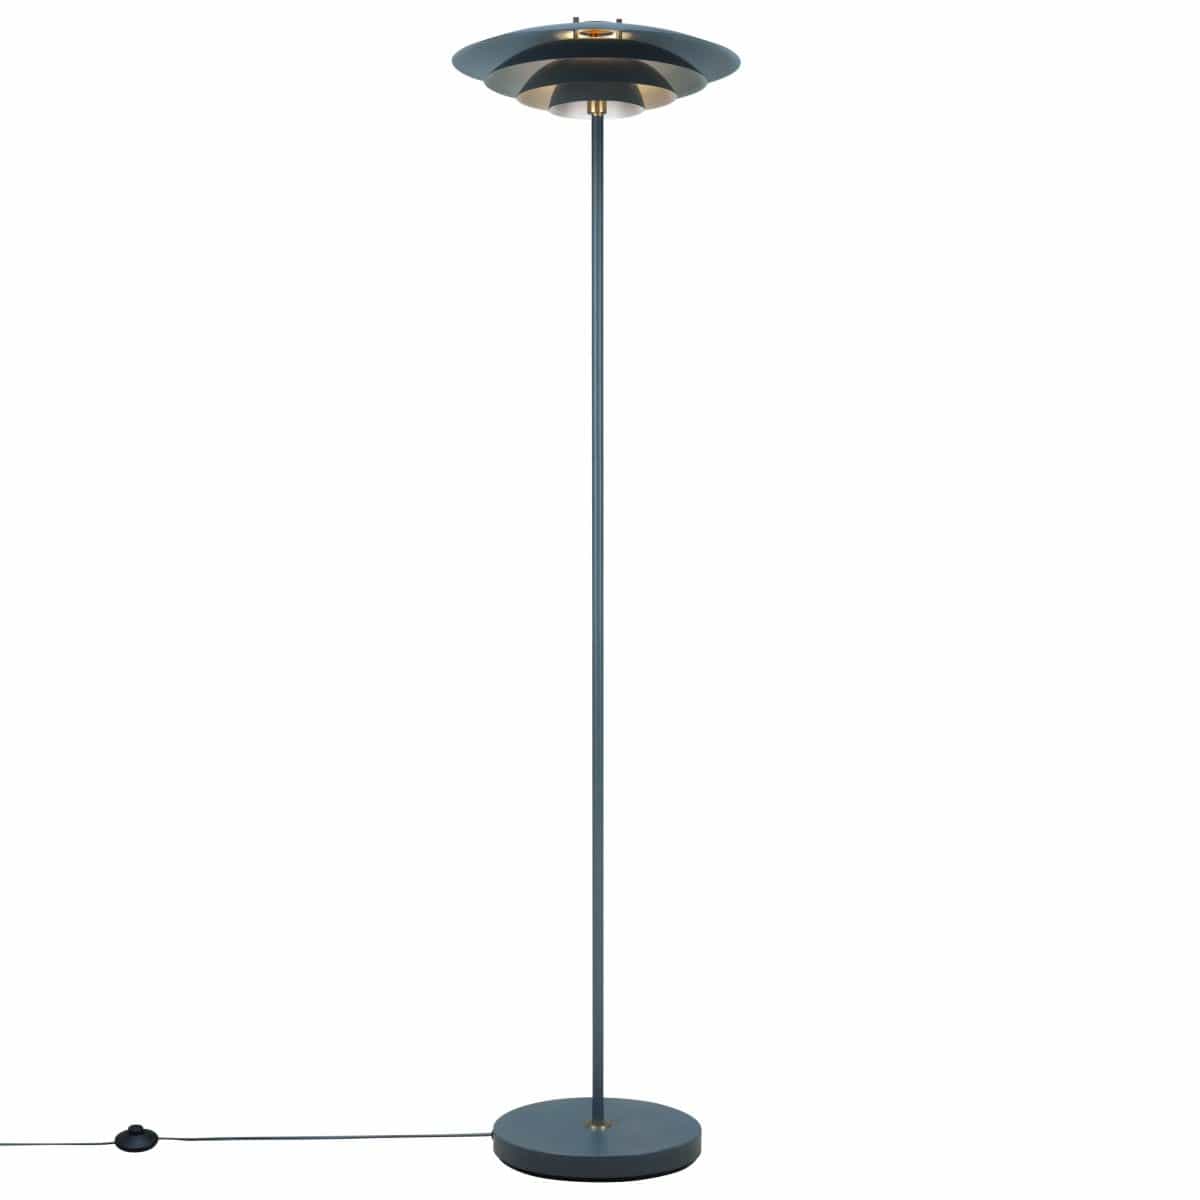 Nordlux Floor Lamp Bretagne Floor Lamp, grey or white